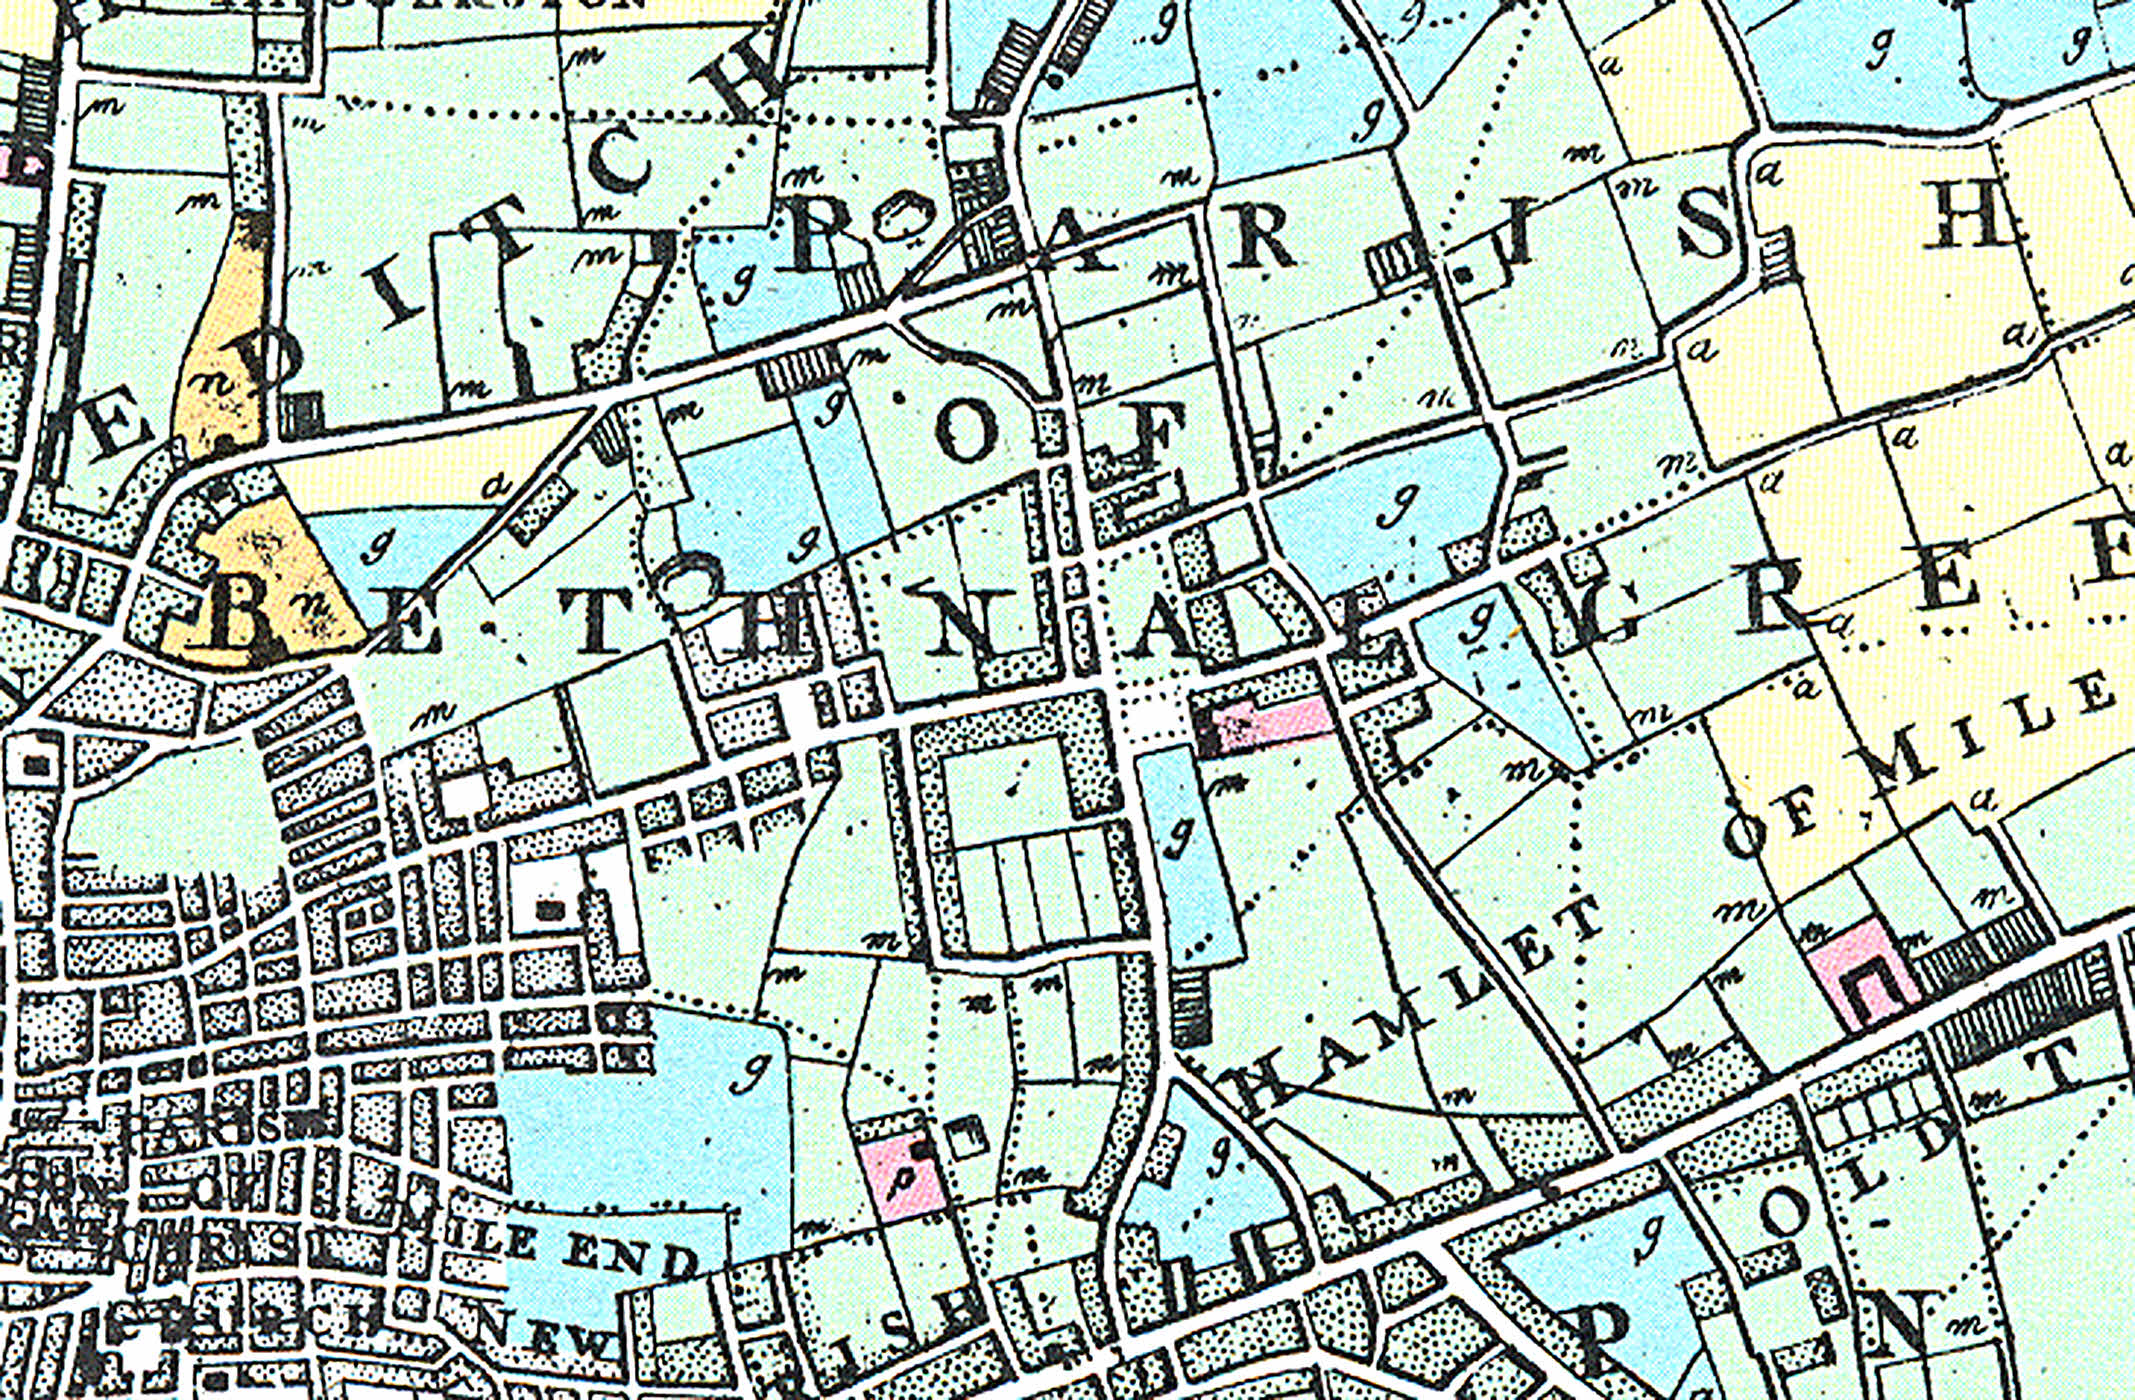 1800 - Land Use Map of London & Environs